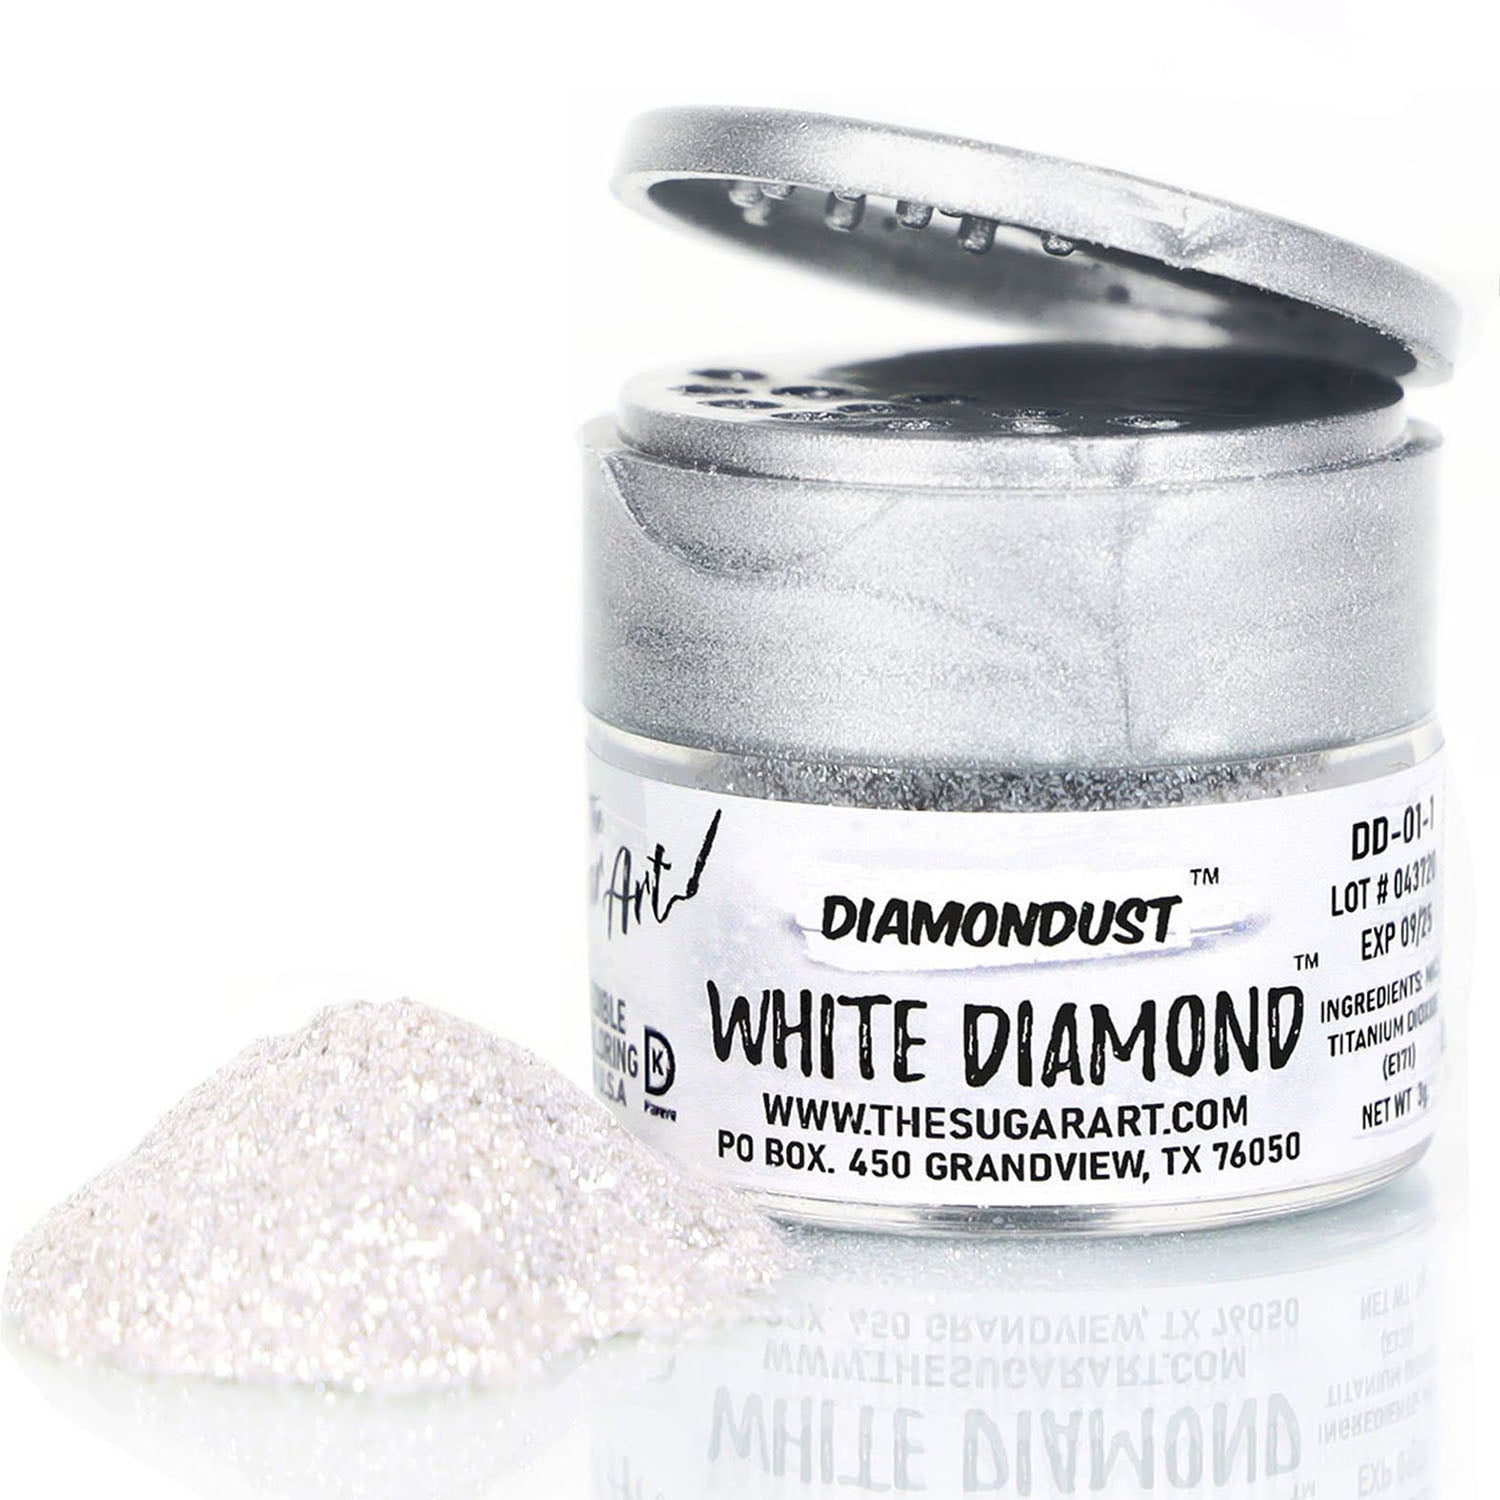 White Diamond Diamondust